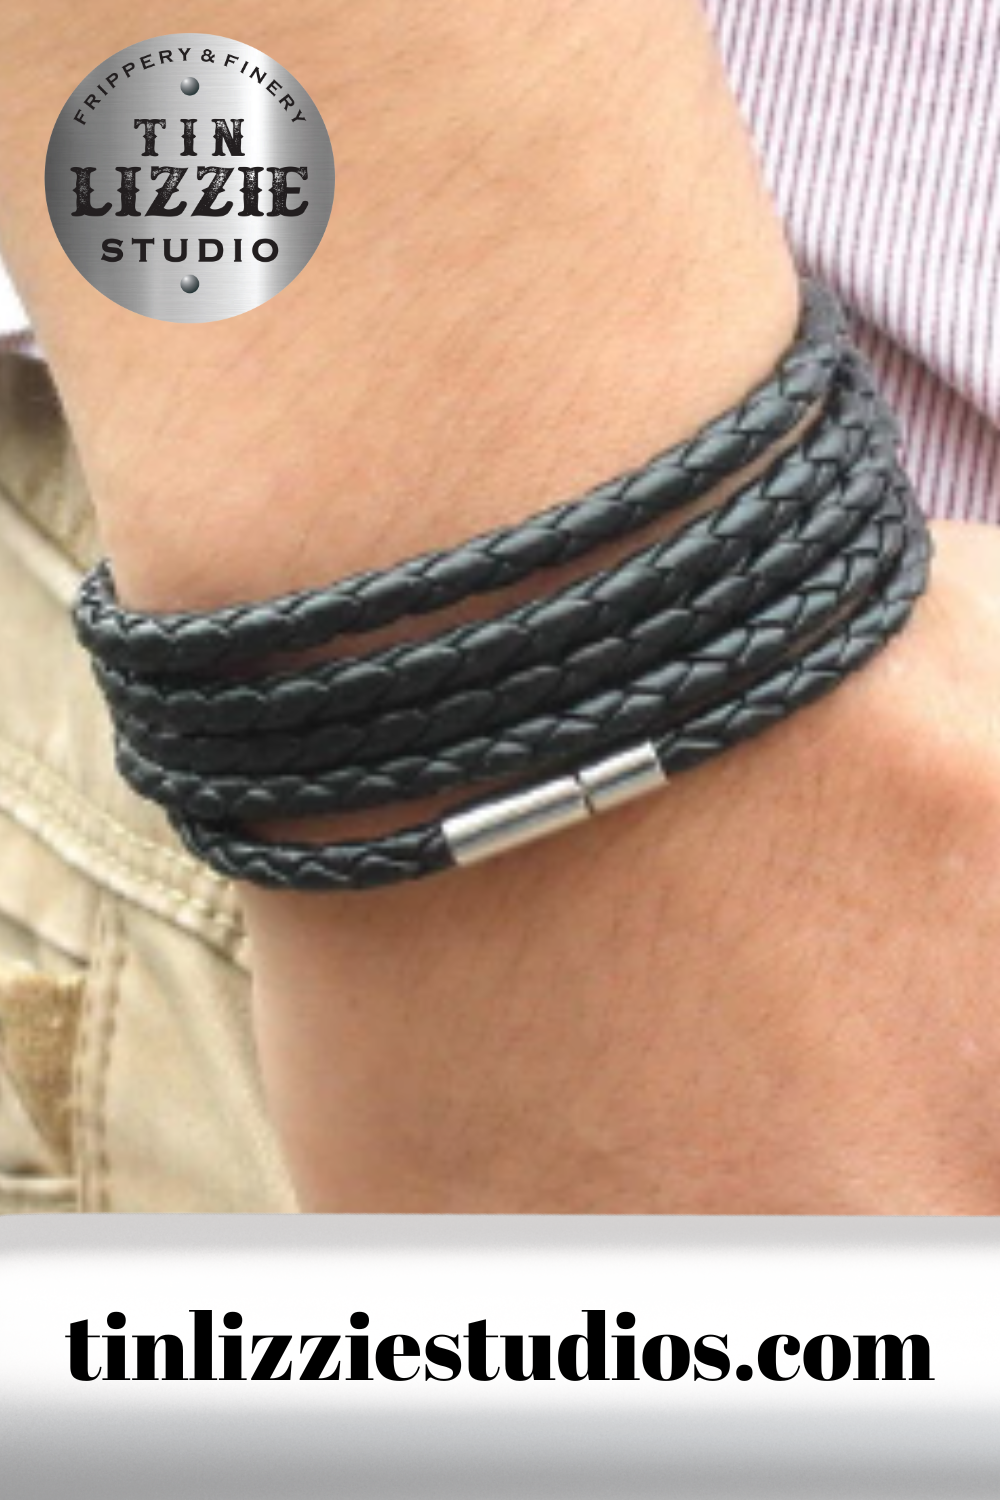 Woven Leather Bracelet